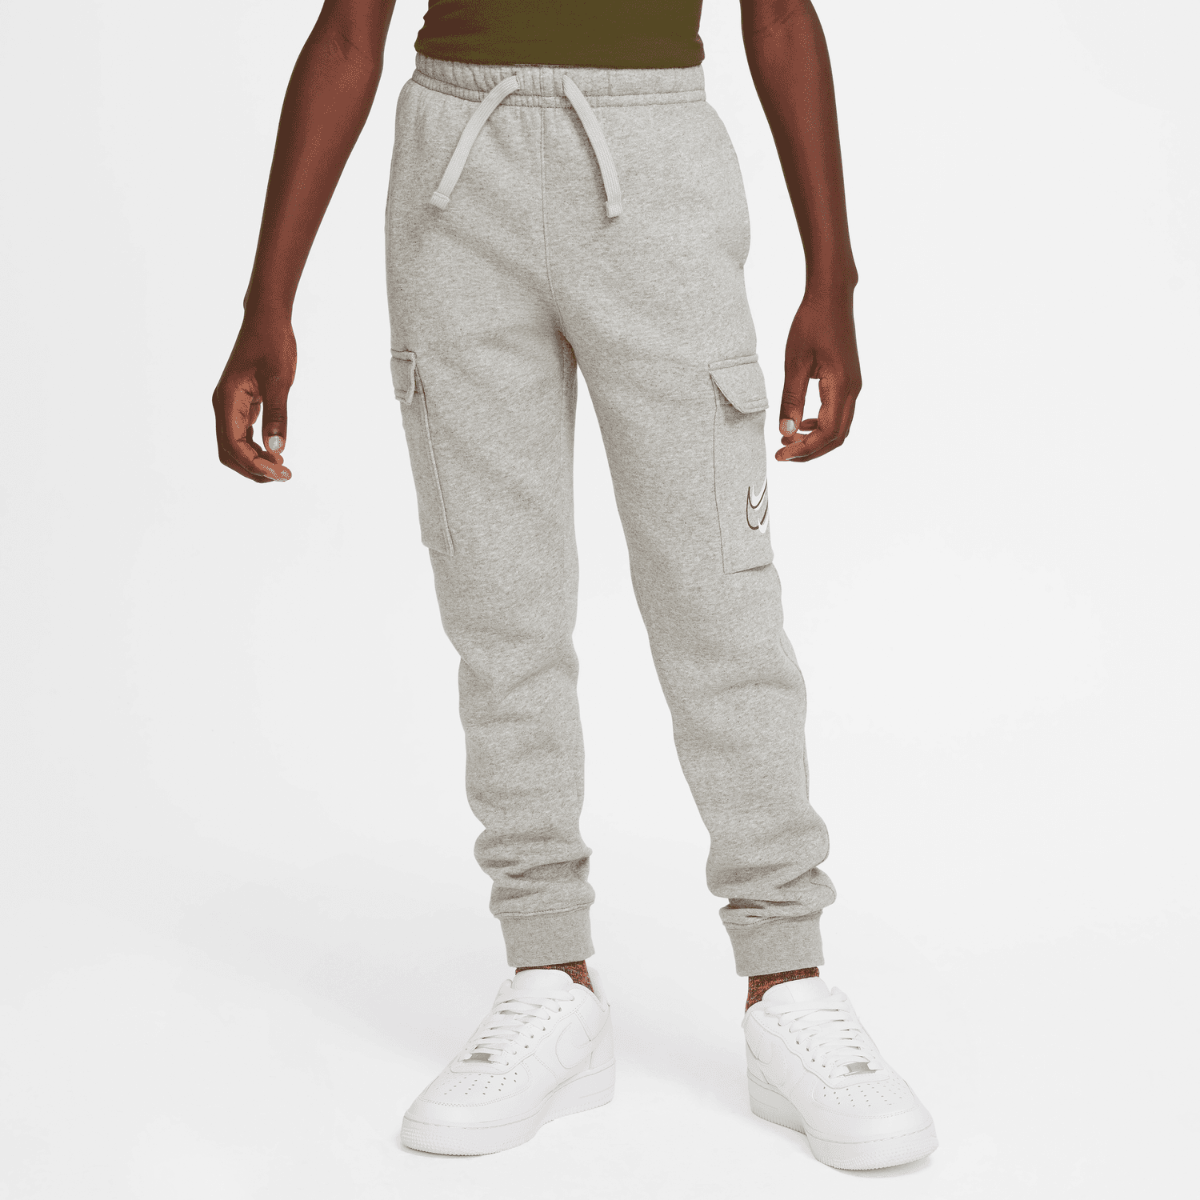 Pantaloni Nike Sportswear Junior Cargo - Grigio/Bianco/Nero